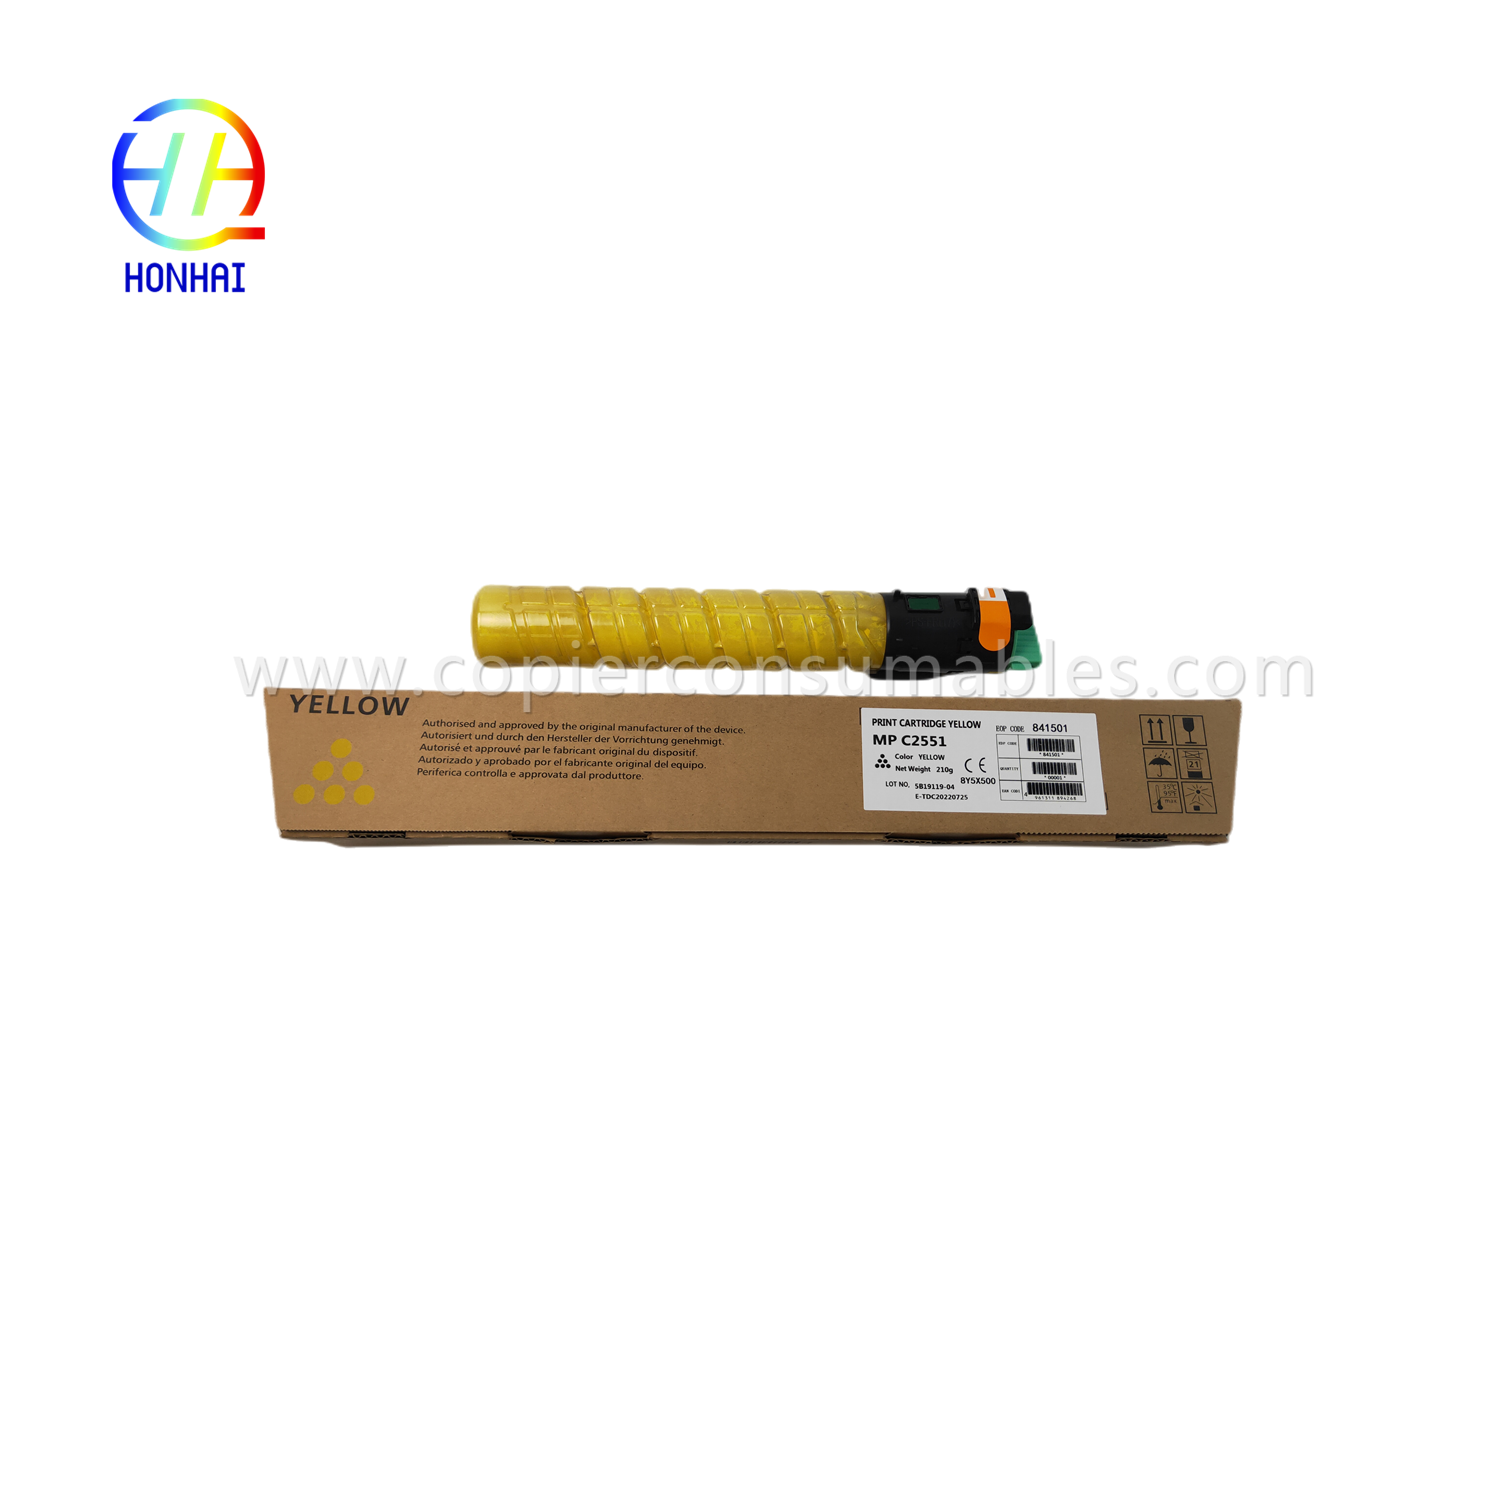 https://c585.goodao.net/toner-cartridge- yellow-for-ricoh-aficio-mpc2051-mpc2551-841501-product/